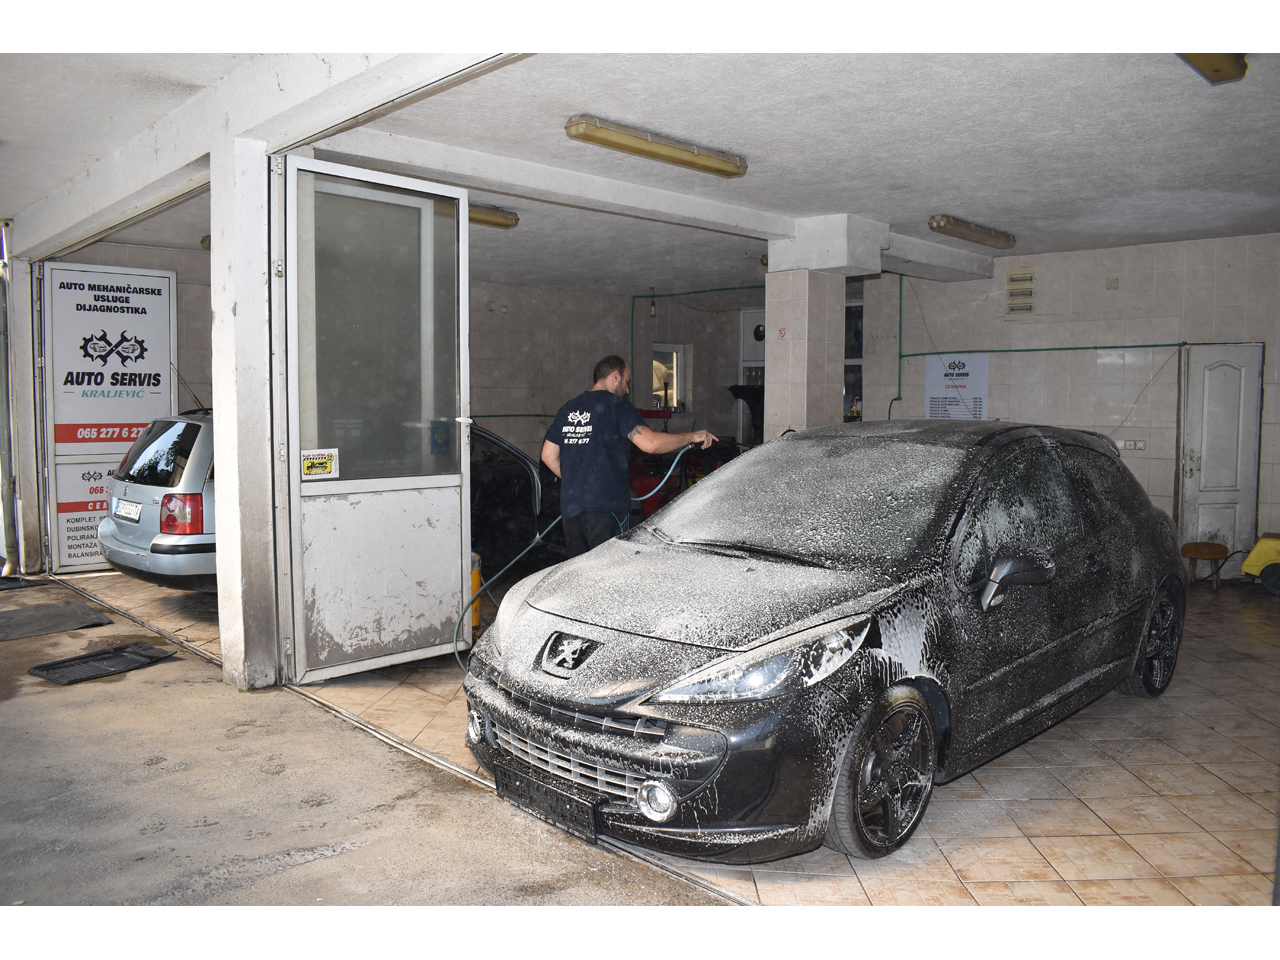 Photo 2 - AUTO SERVICE KRALJEVIC - CAR WASH, VULCANIZER, CAR REPAIRS Car service Belgrade